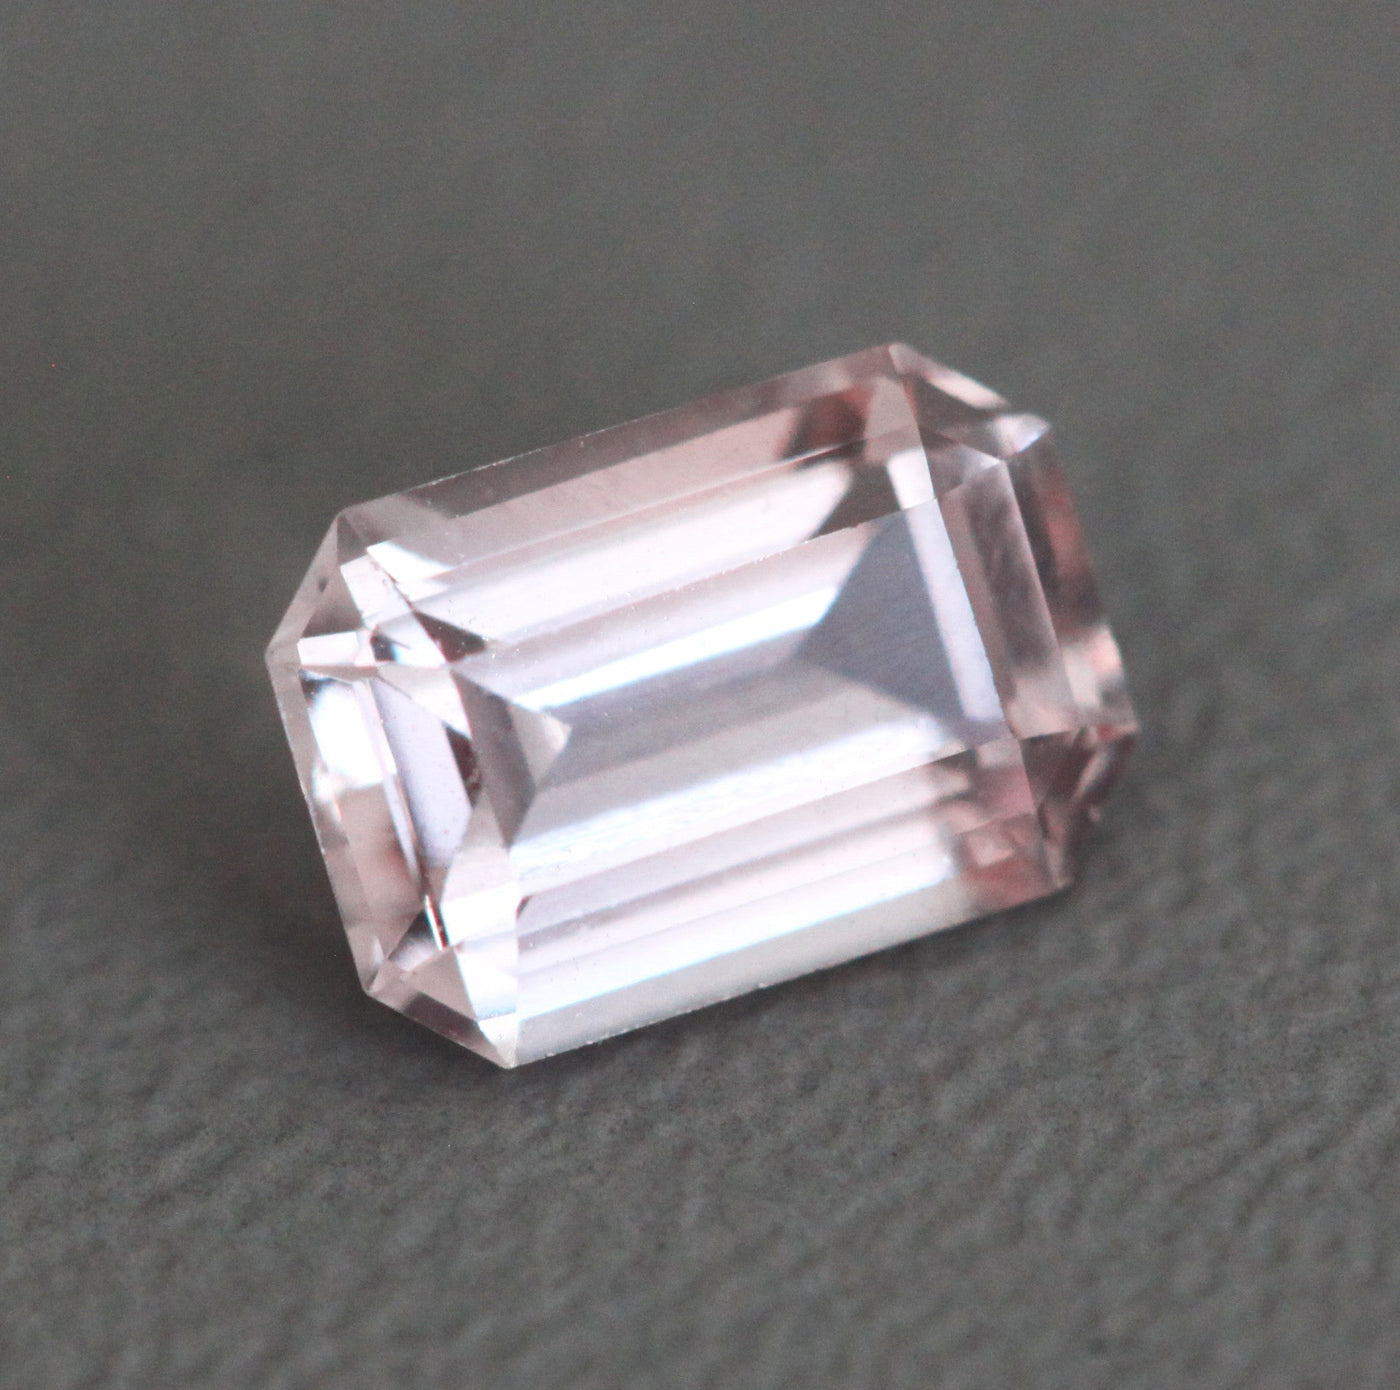 Loose peach octagon-shaped sapphire